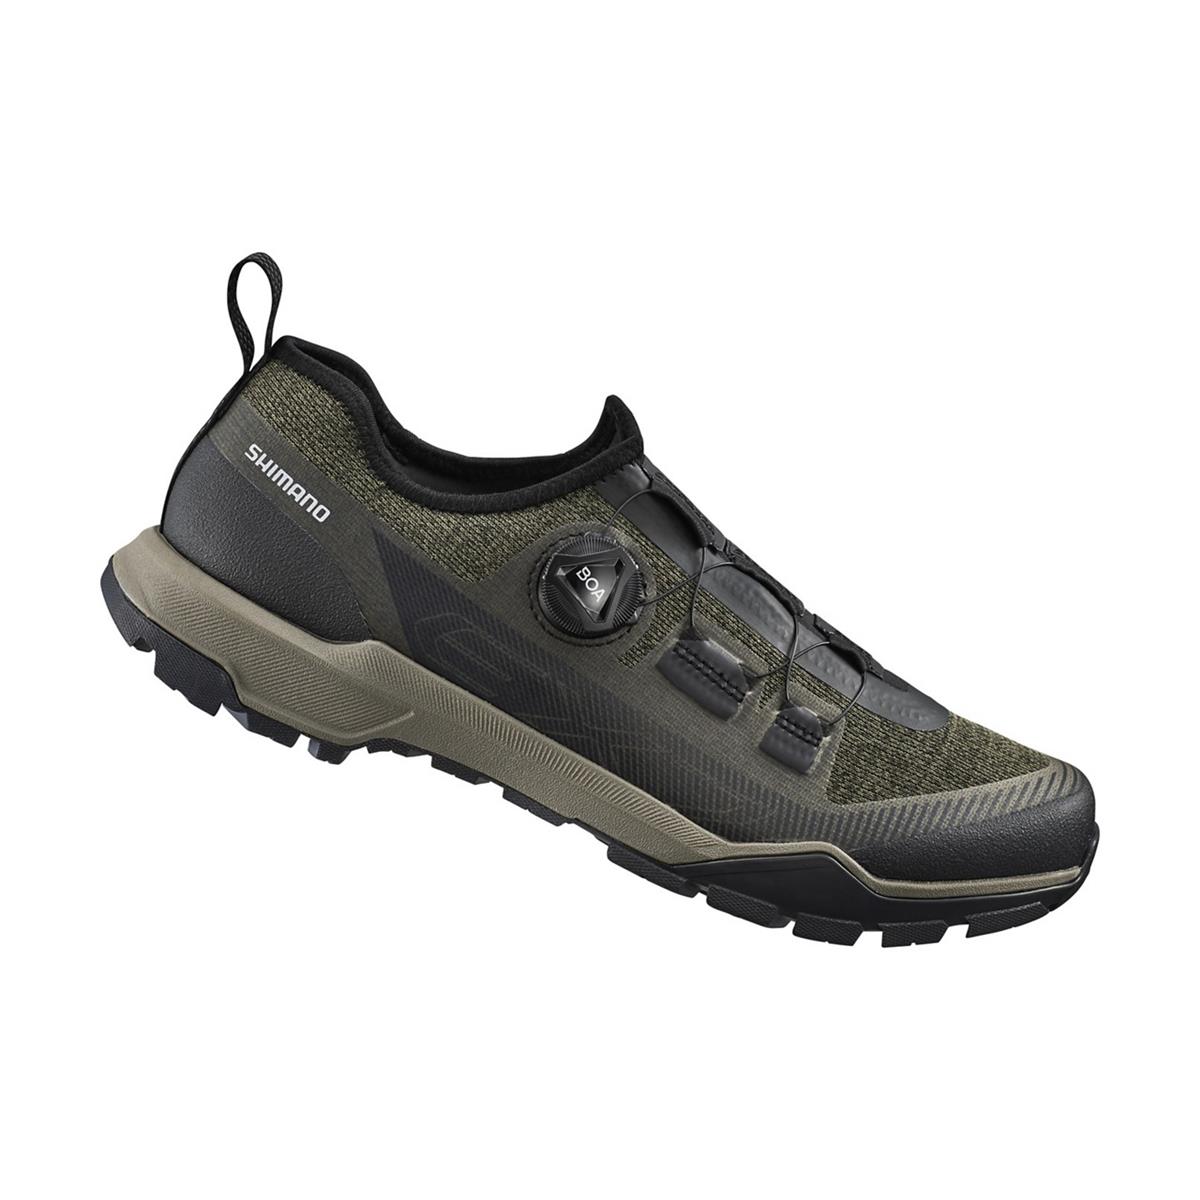 Trekking / MTB Shoes SH-EX700 Green Size 39